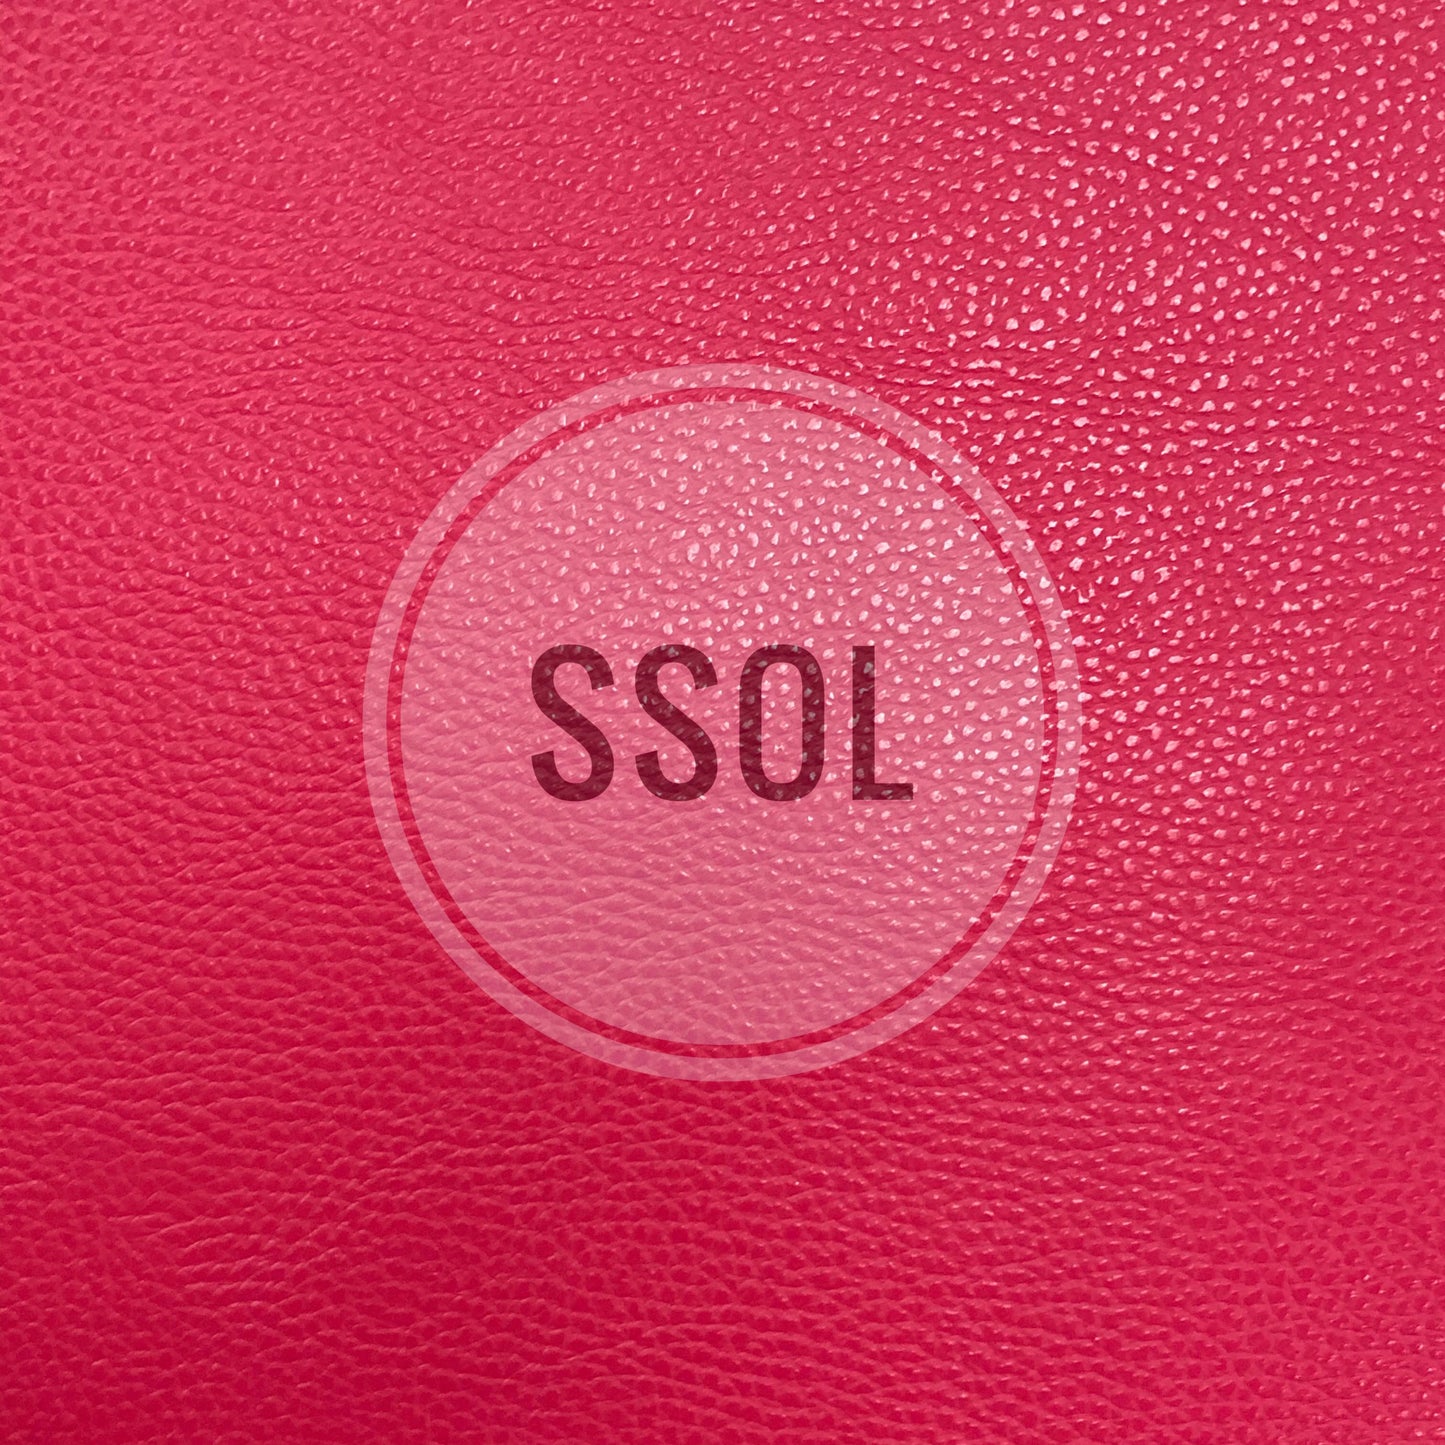 Vinyl/PU Leather - Plain Solids Textured 09 (Rose Pink)